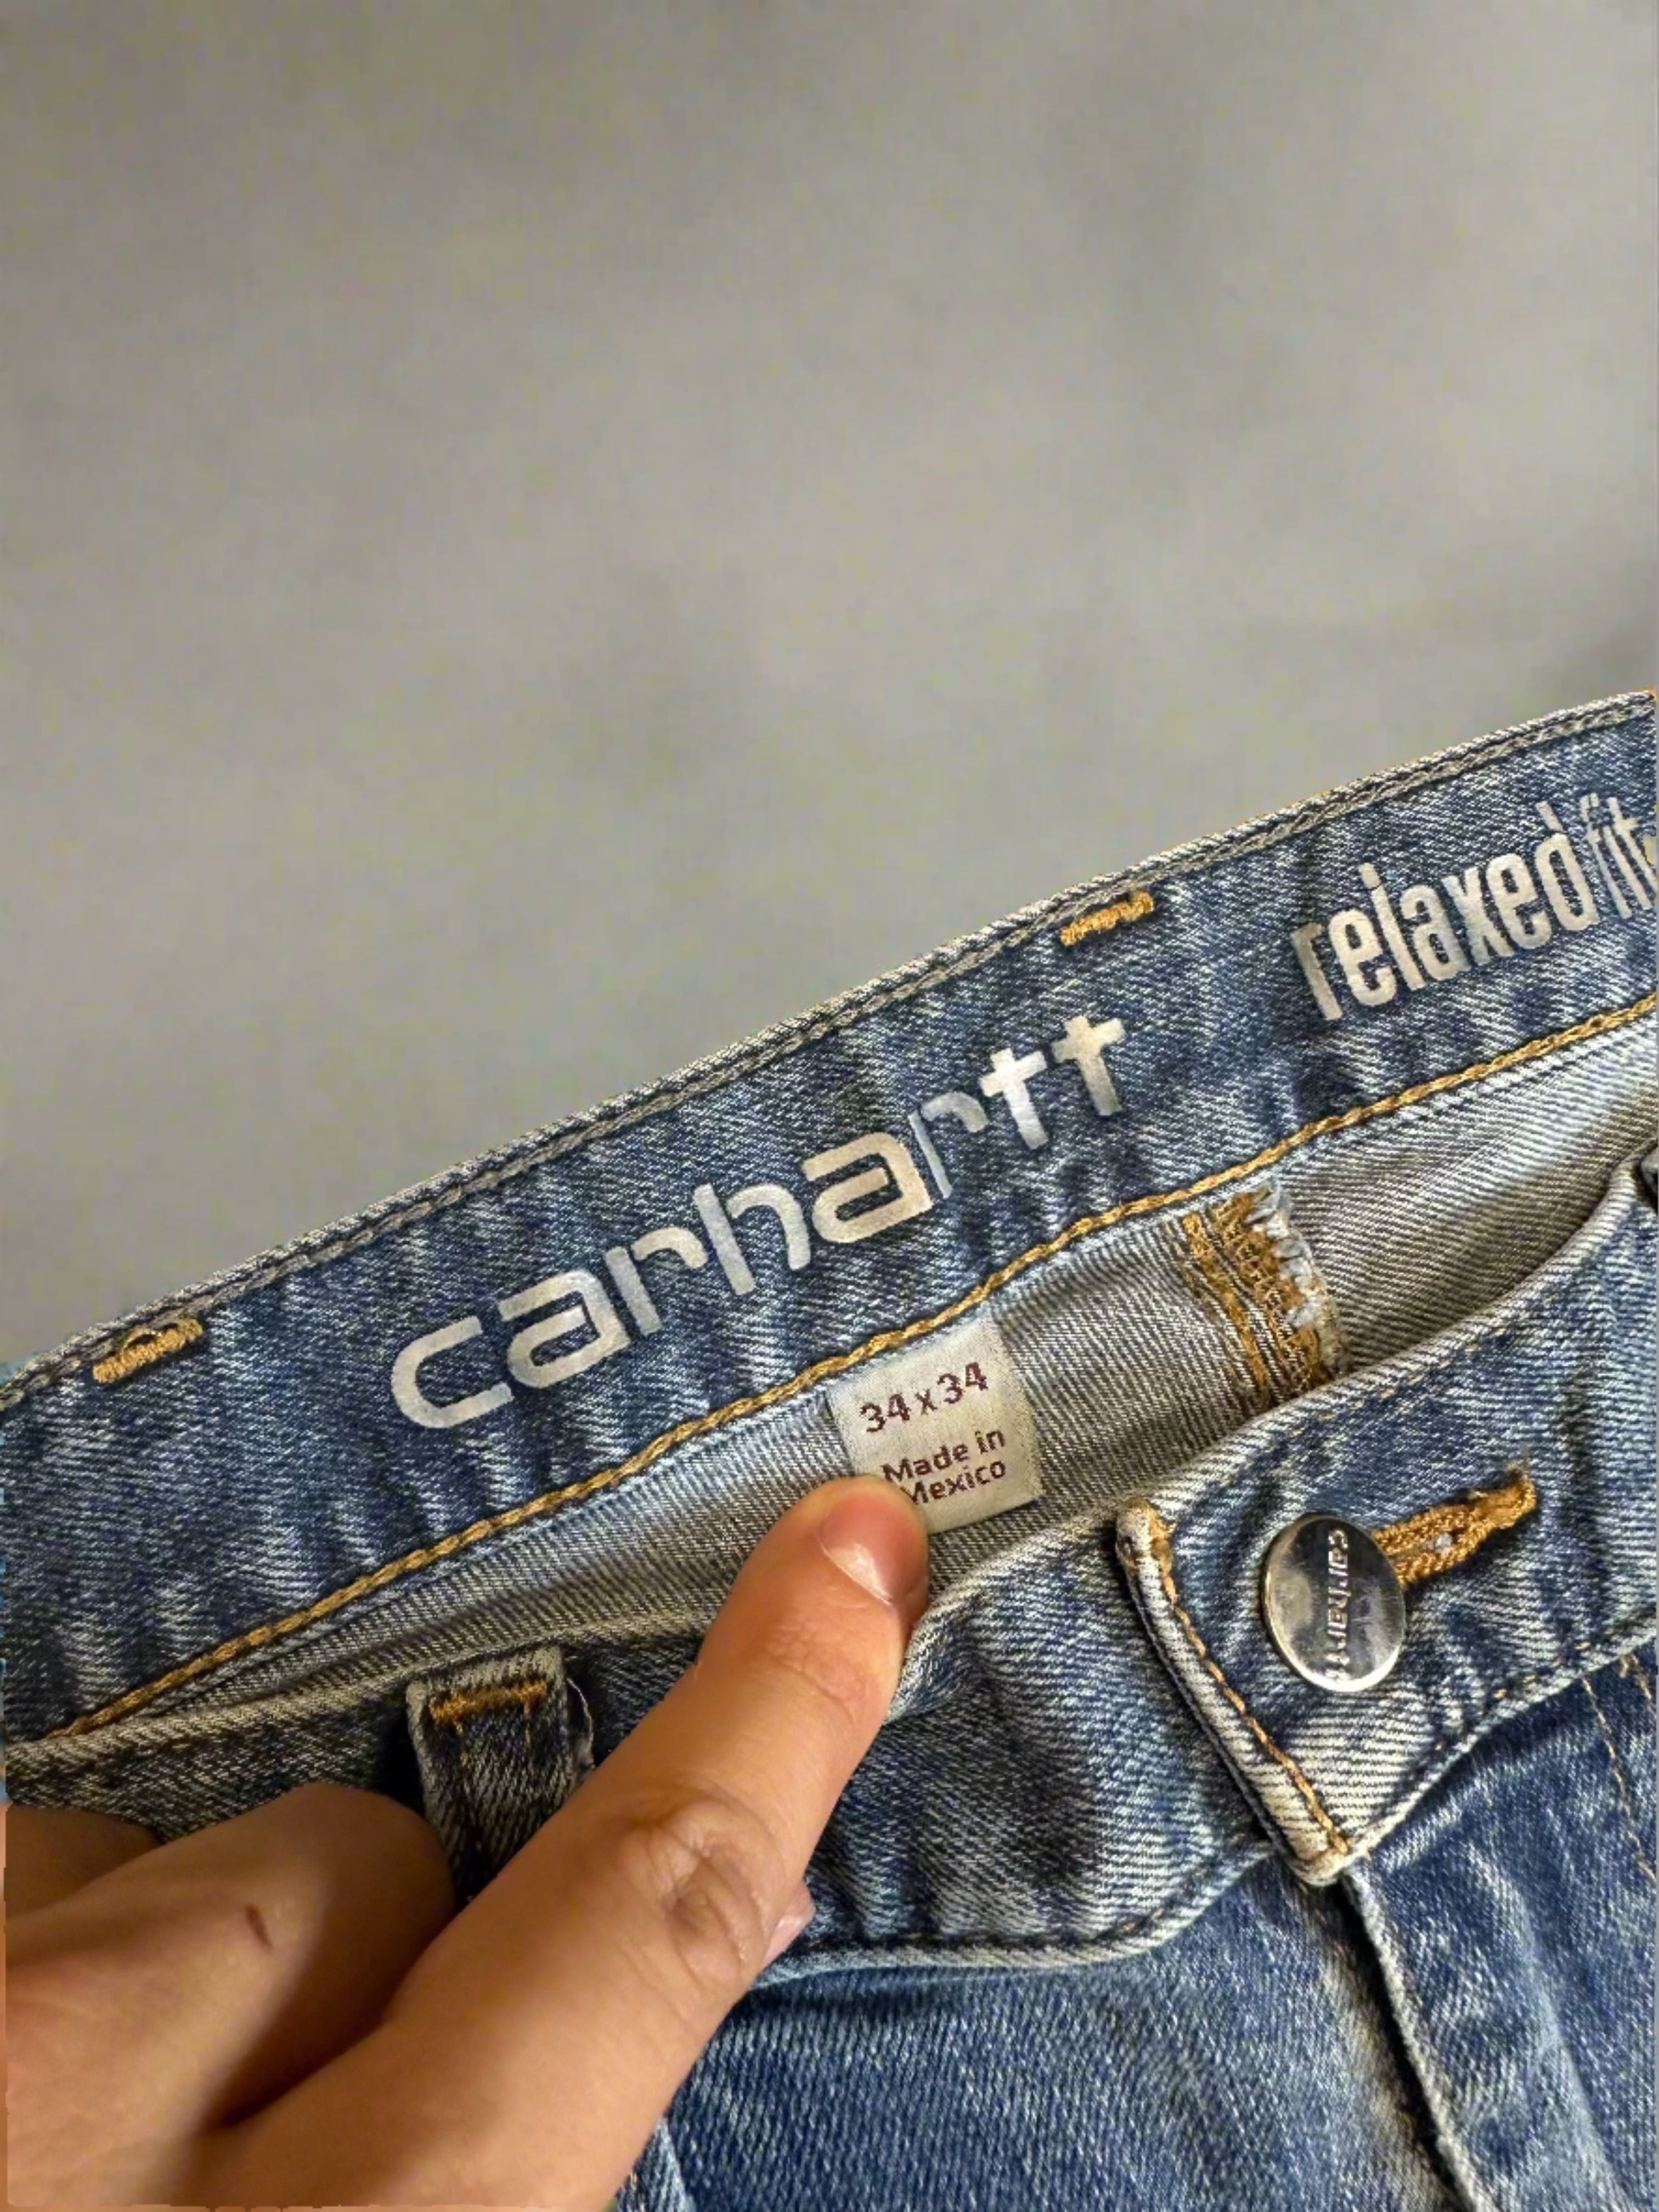 Vintage Carhartt Denim Pants - size 34x34